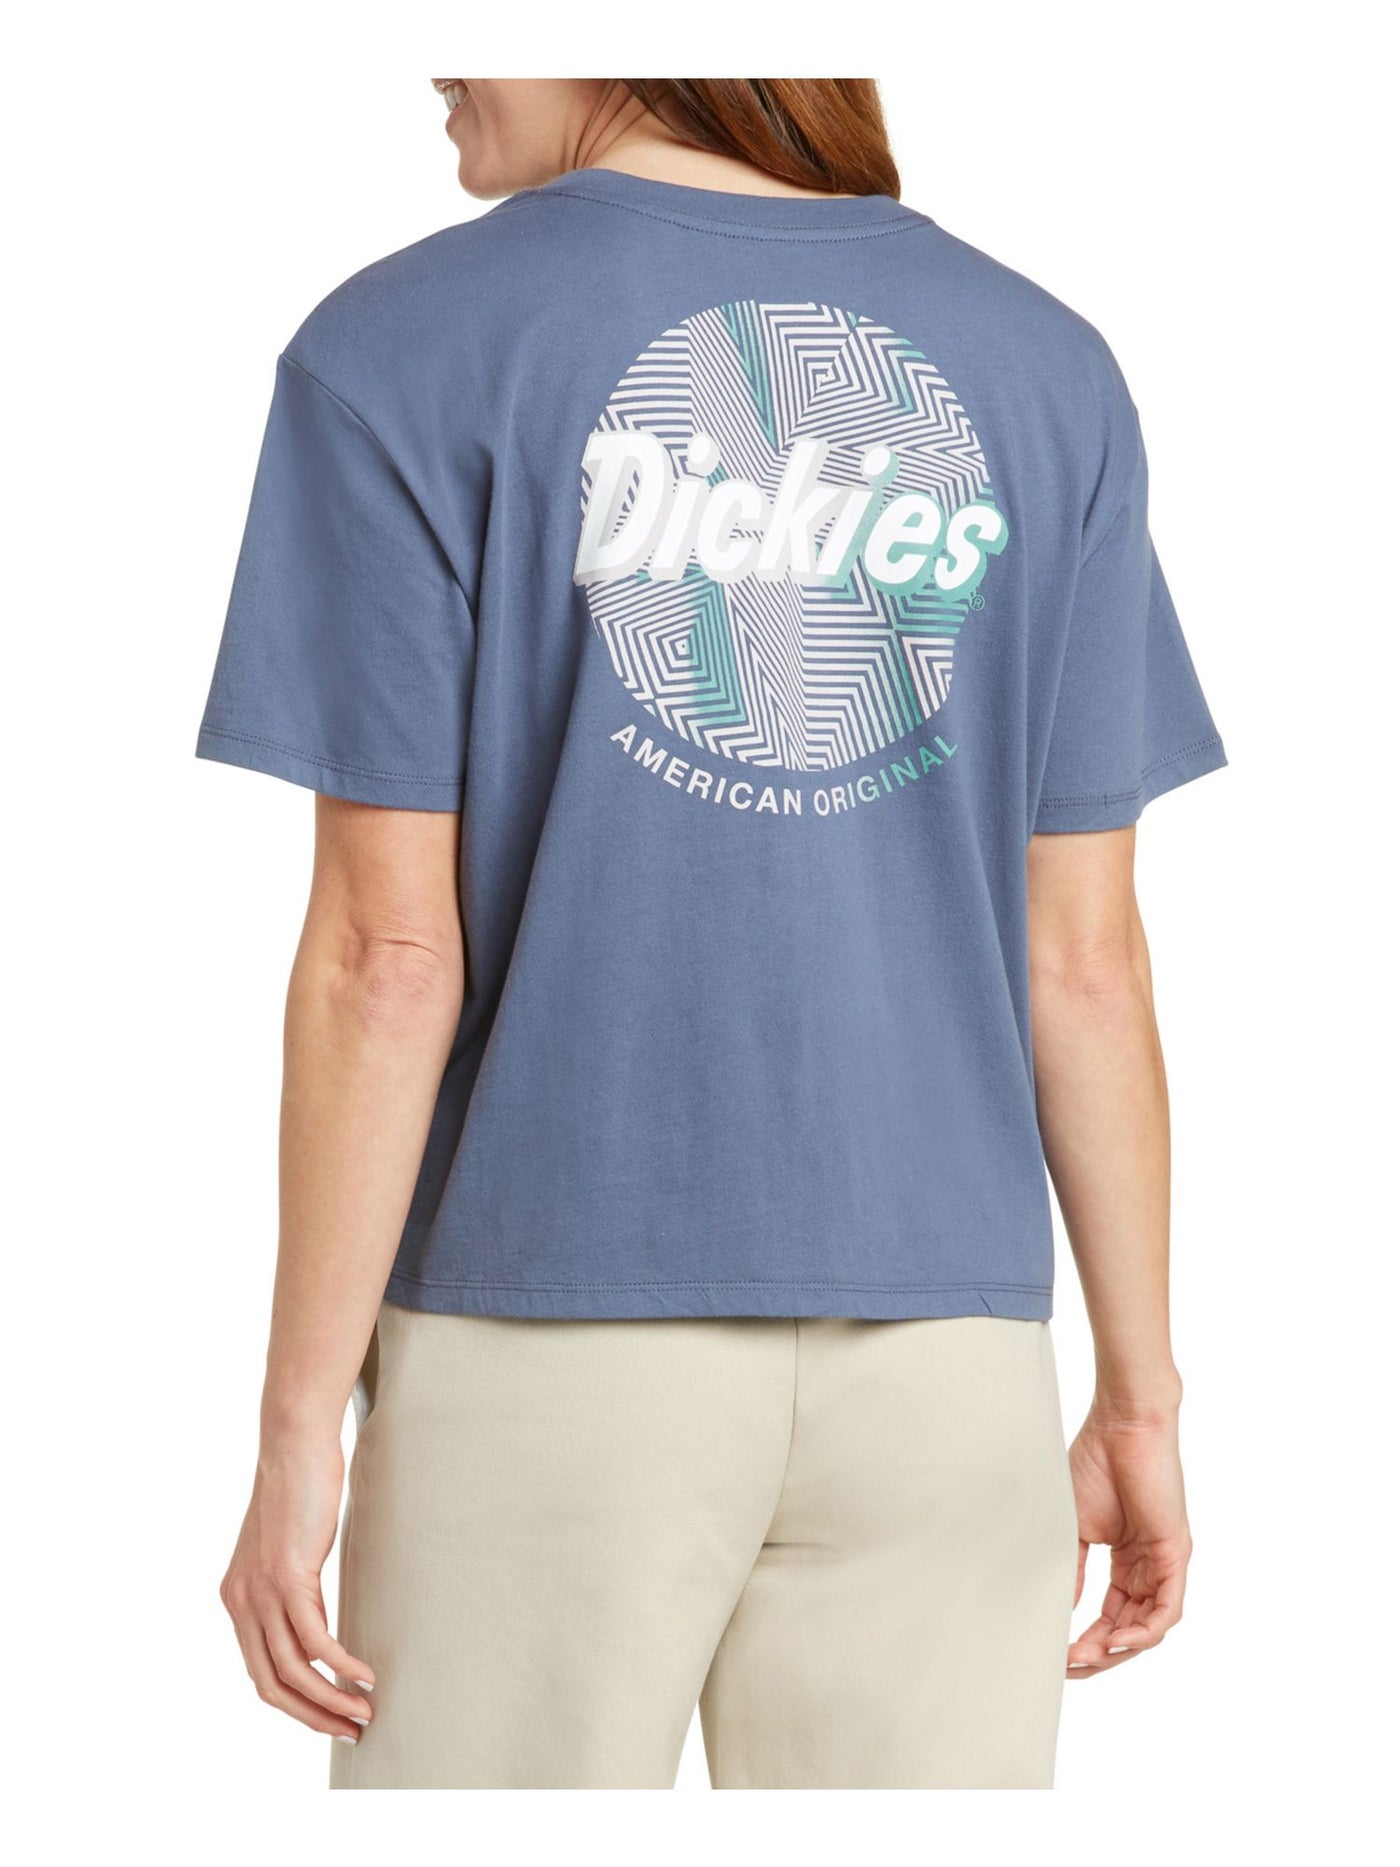 DICKIES Womens Navy Logo Graphic Short Sleeve Crew Neck T-Shirt Juniors L